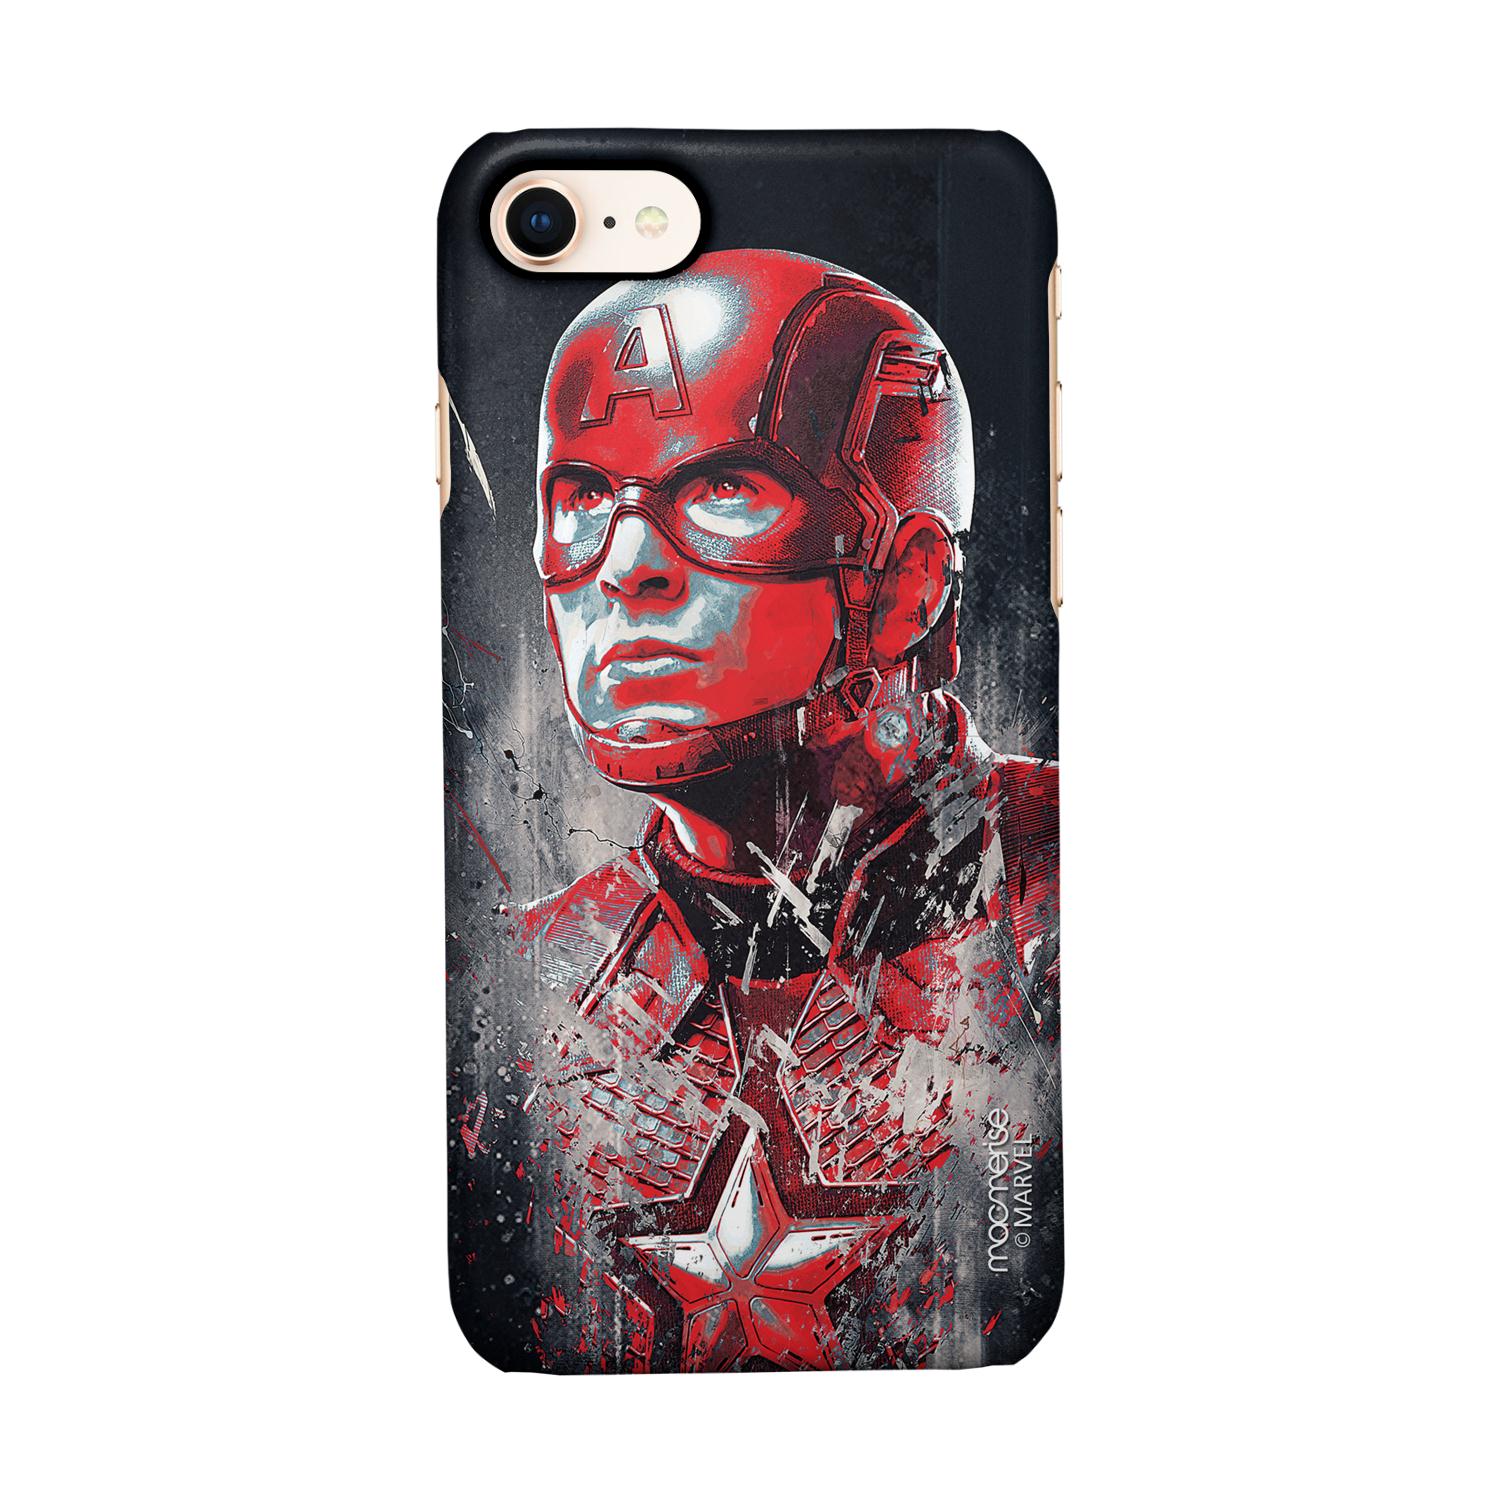 Buy Charcoal Art Captain America - Sleek Phone Case for iPhone 8 Online